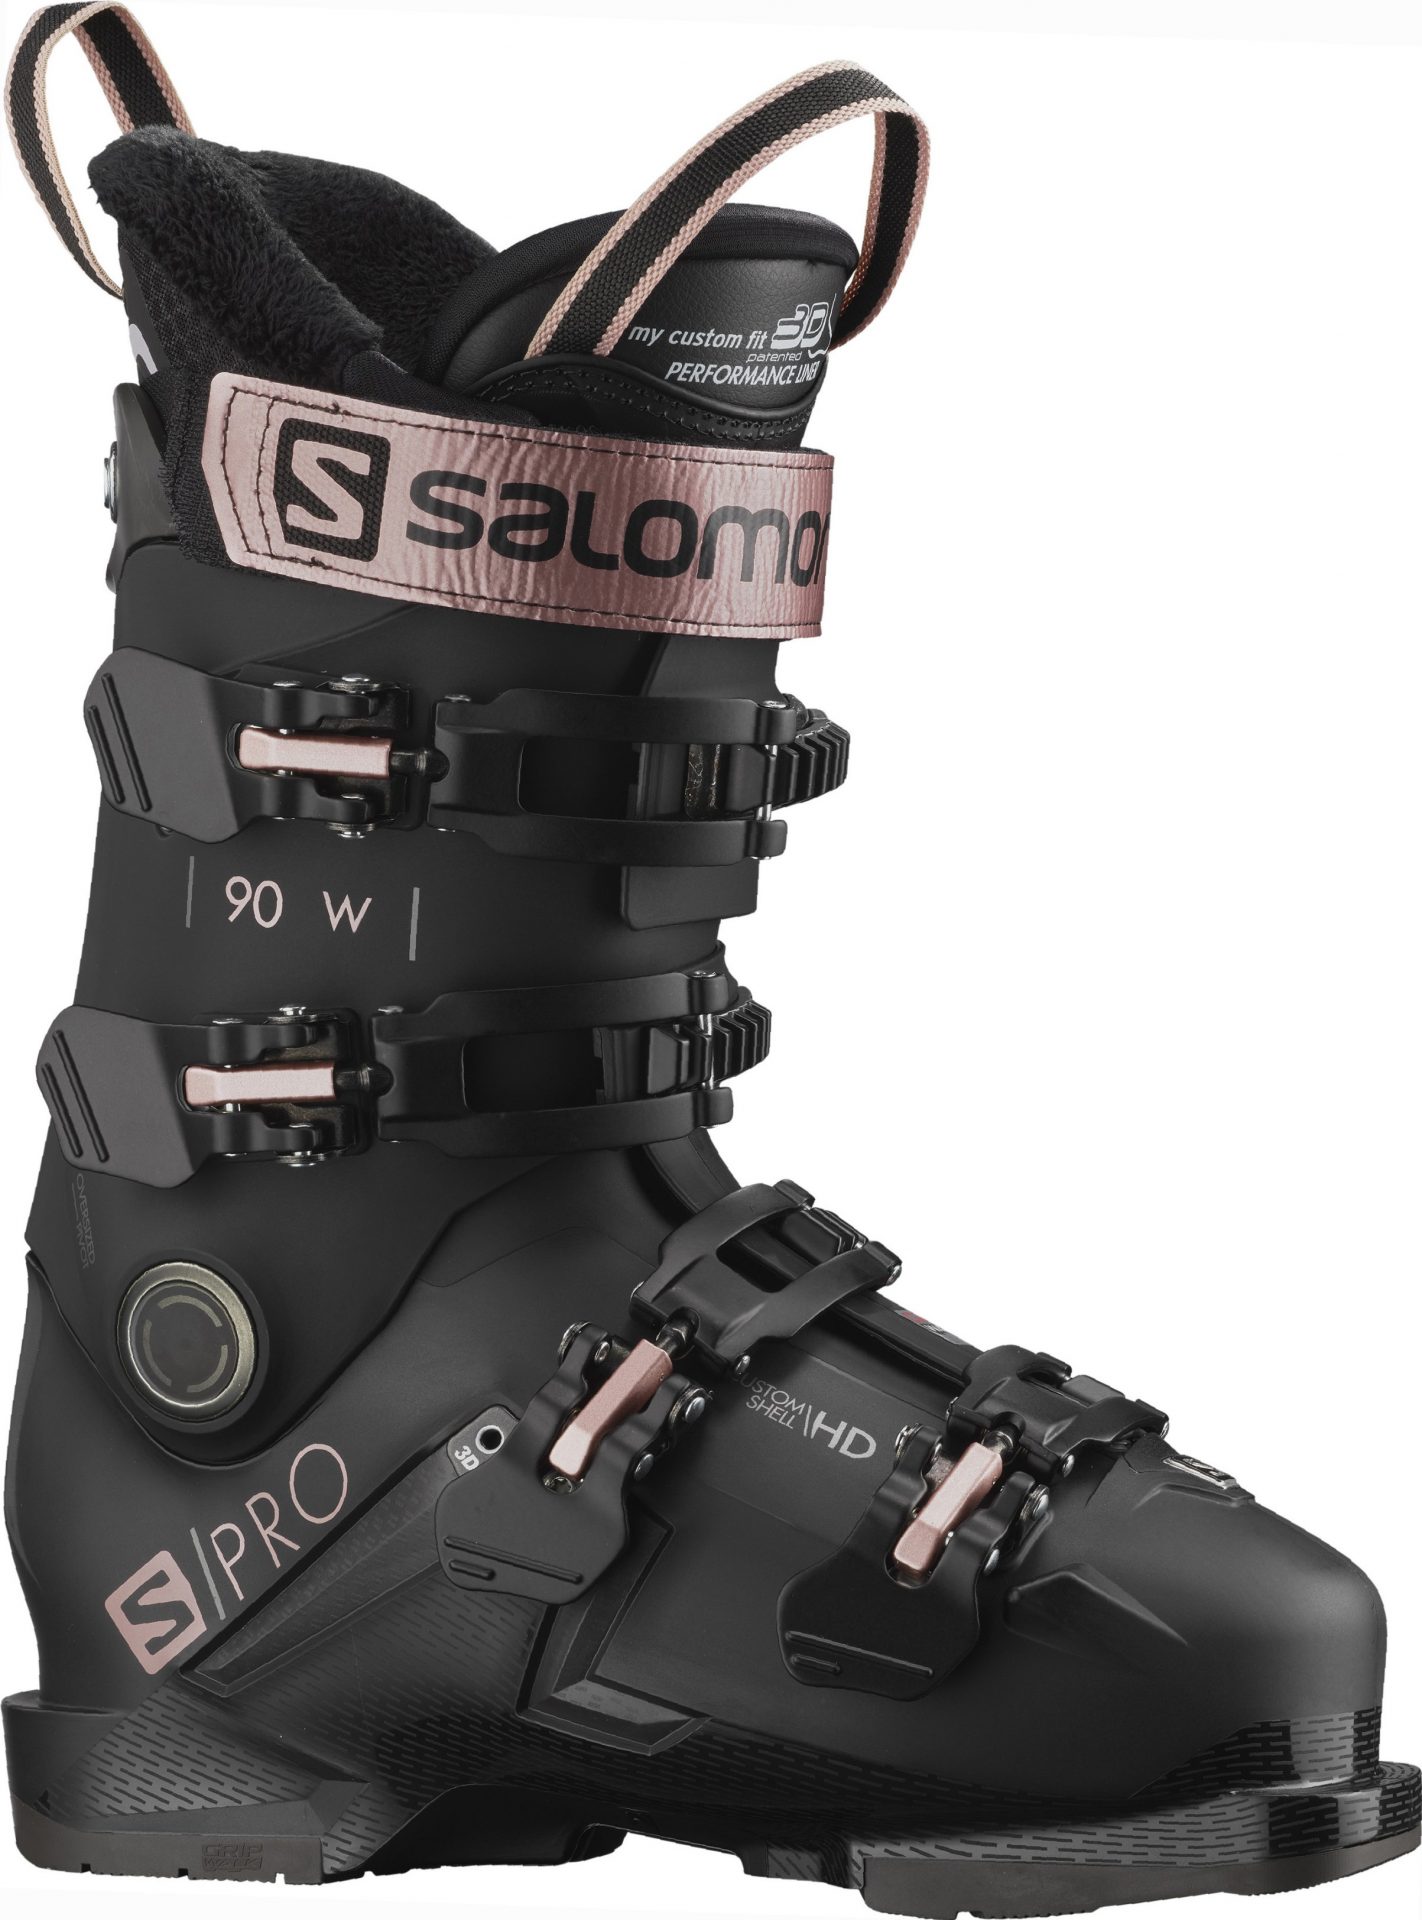 synonymordbog Strøm Sammenligning Salomon S Pro 90W GW ski boots - Paul's Ski Shop